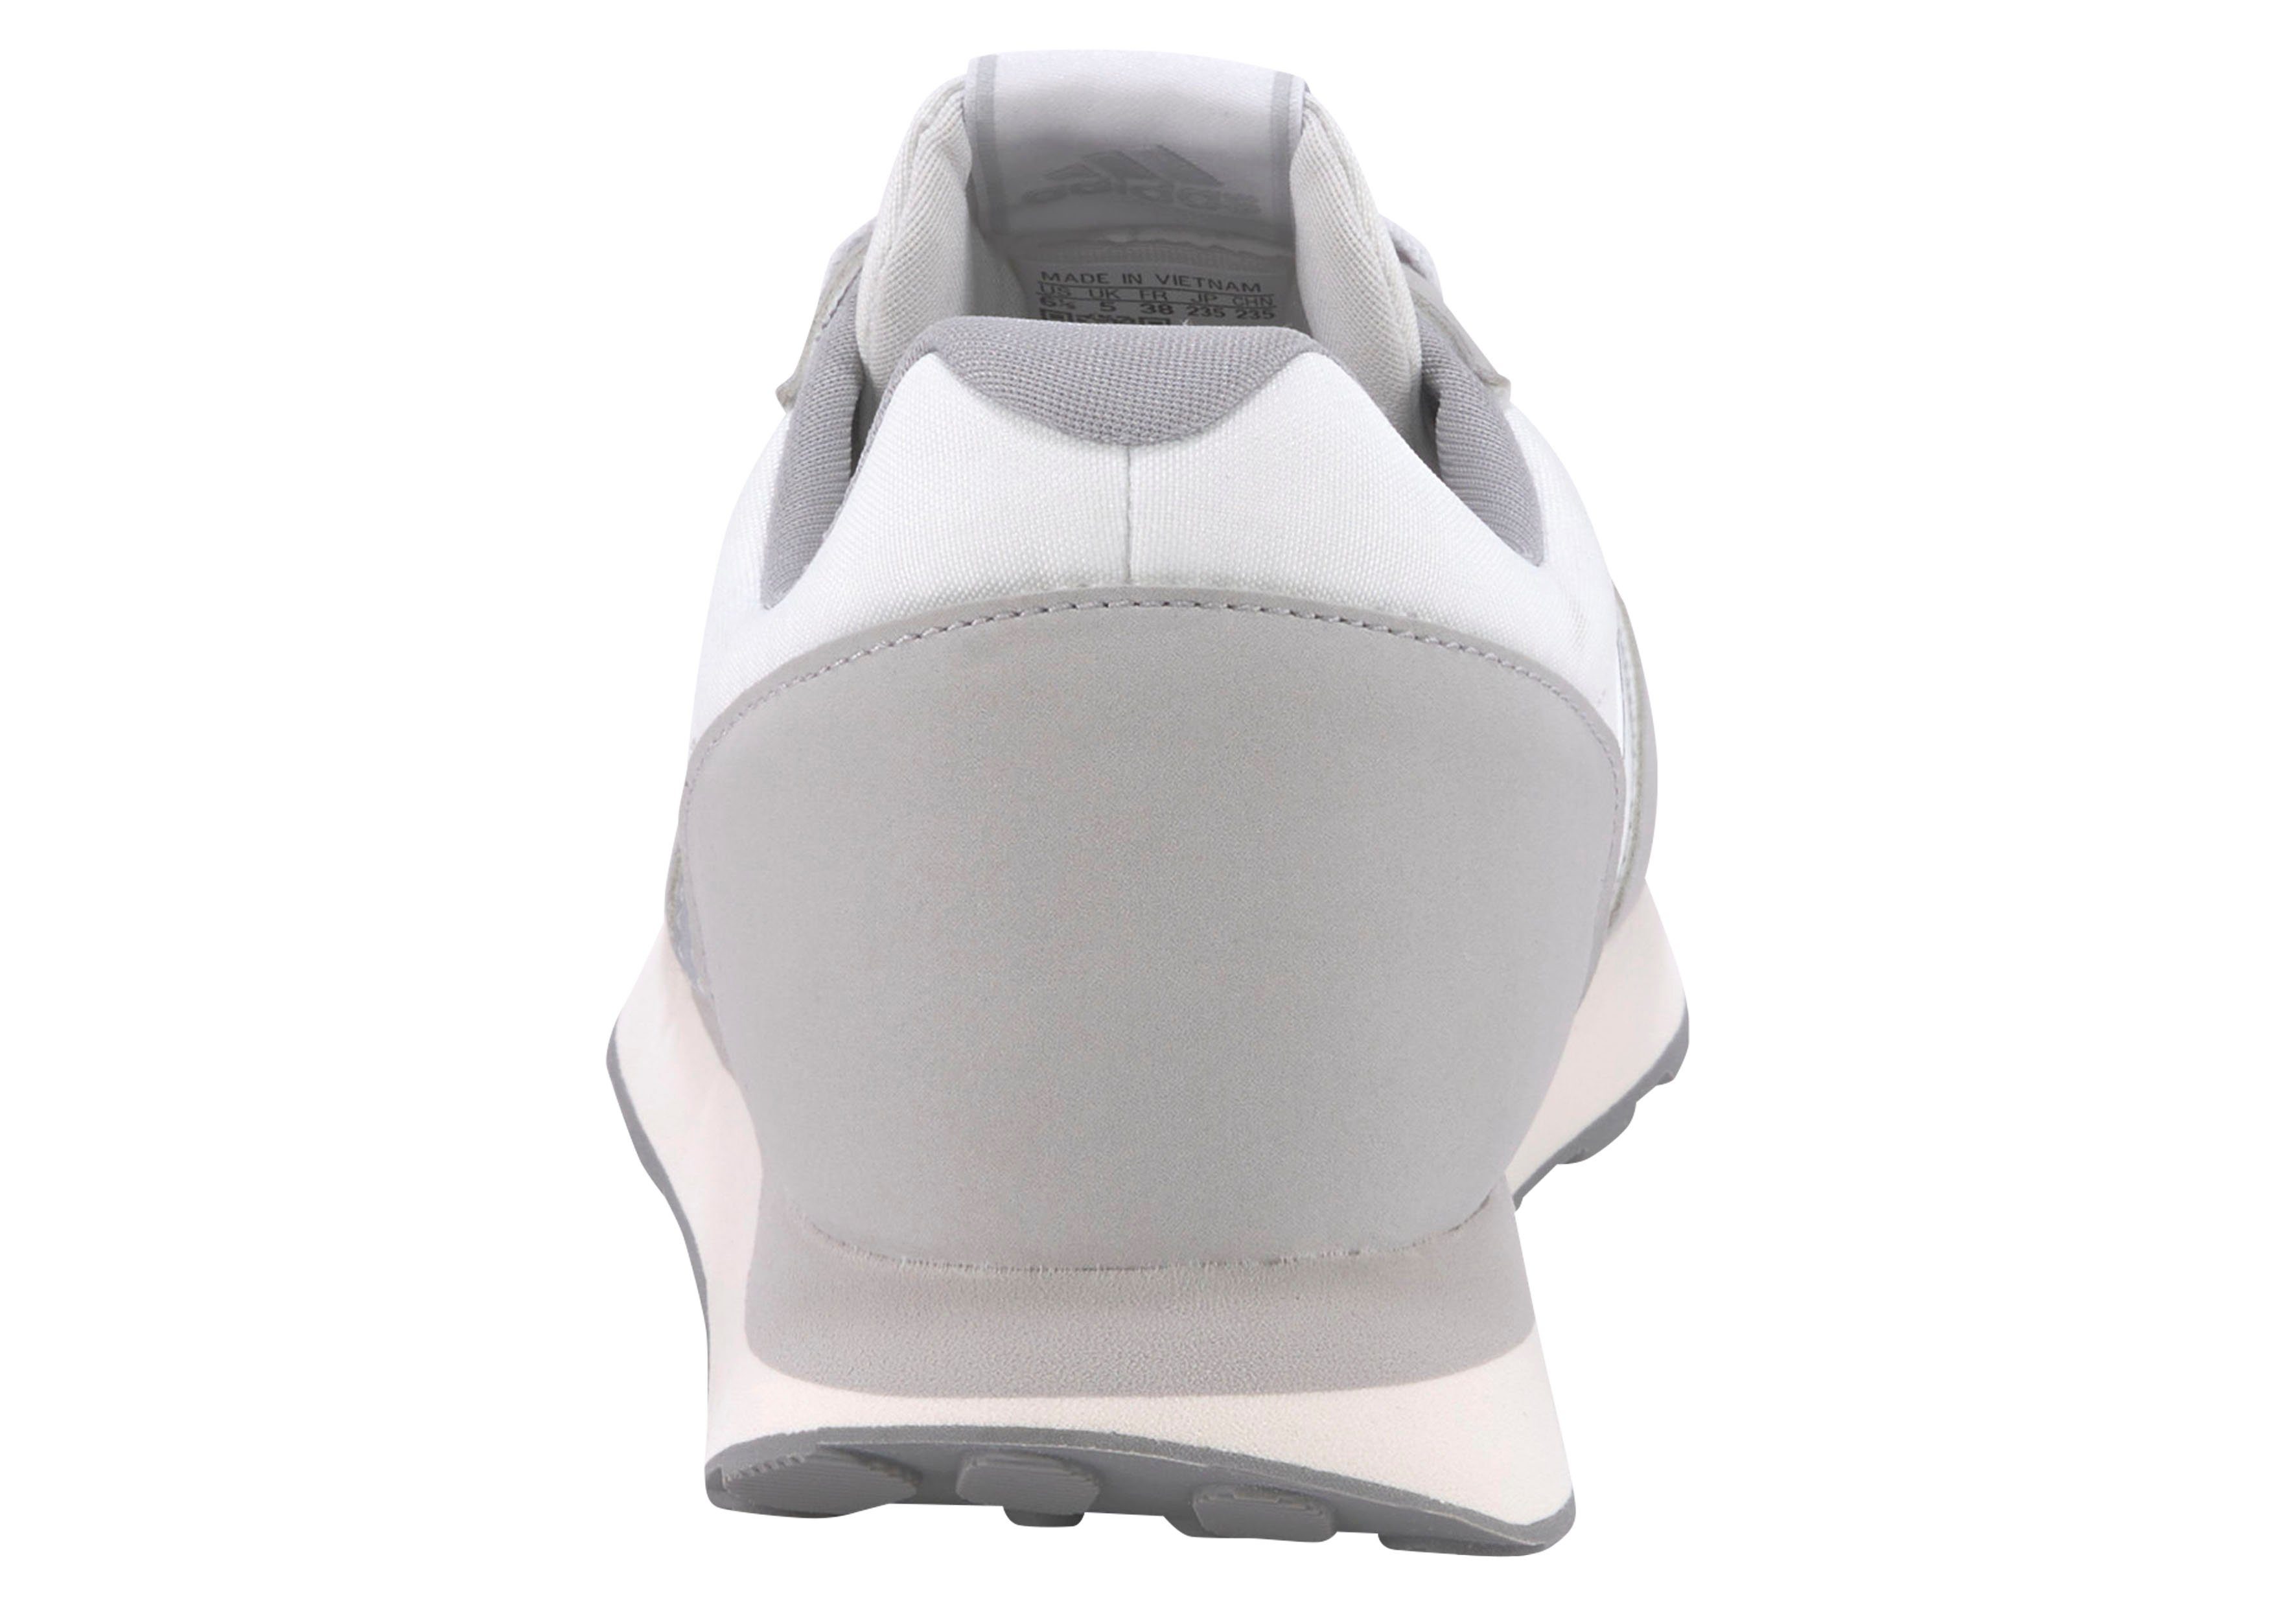 Two RUN adidas LIFESTYLE / LAUFSCHUH Crystal Sportswear Silver 3.0 Matte Grey / Sneaker 60S White